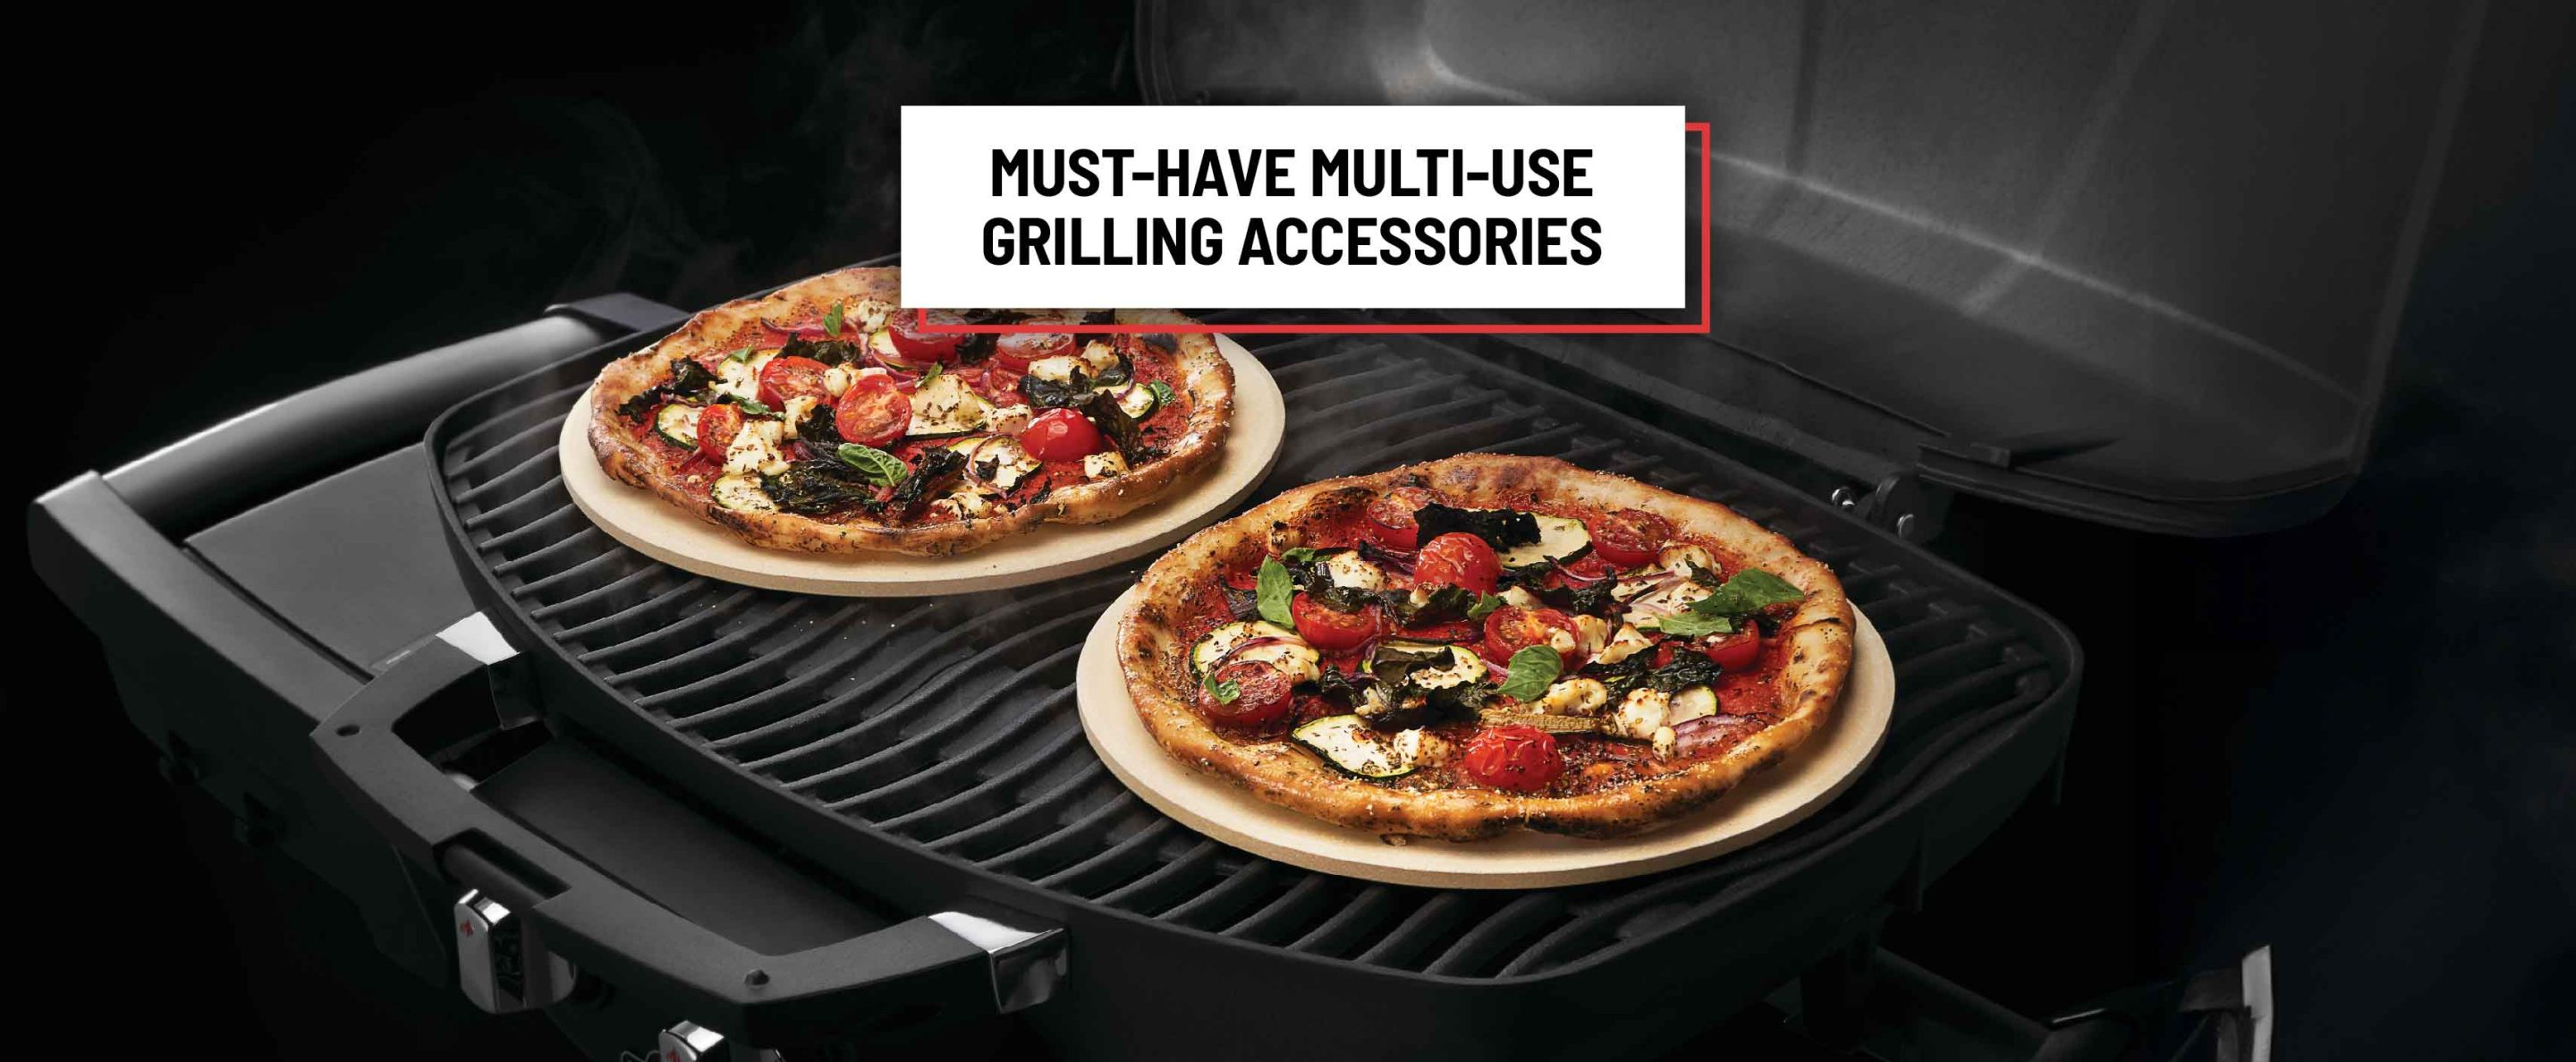 multi-use grilling accessories